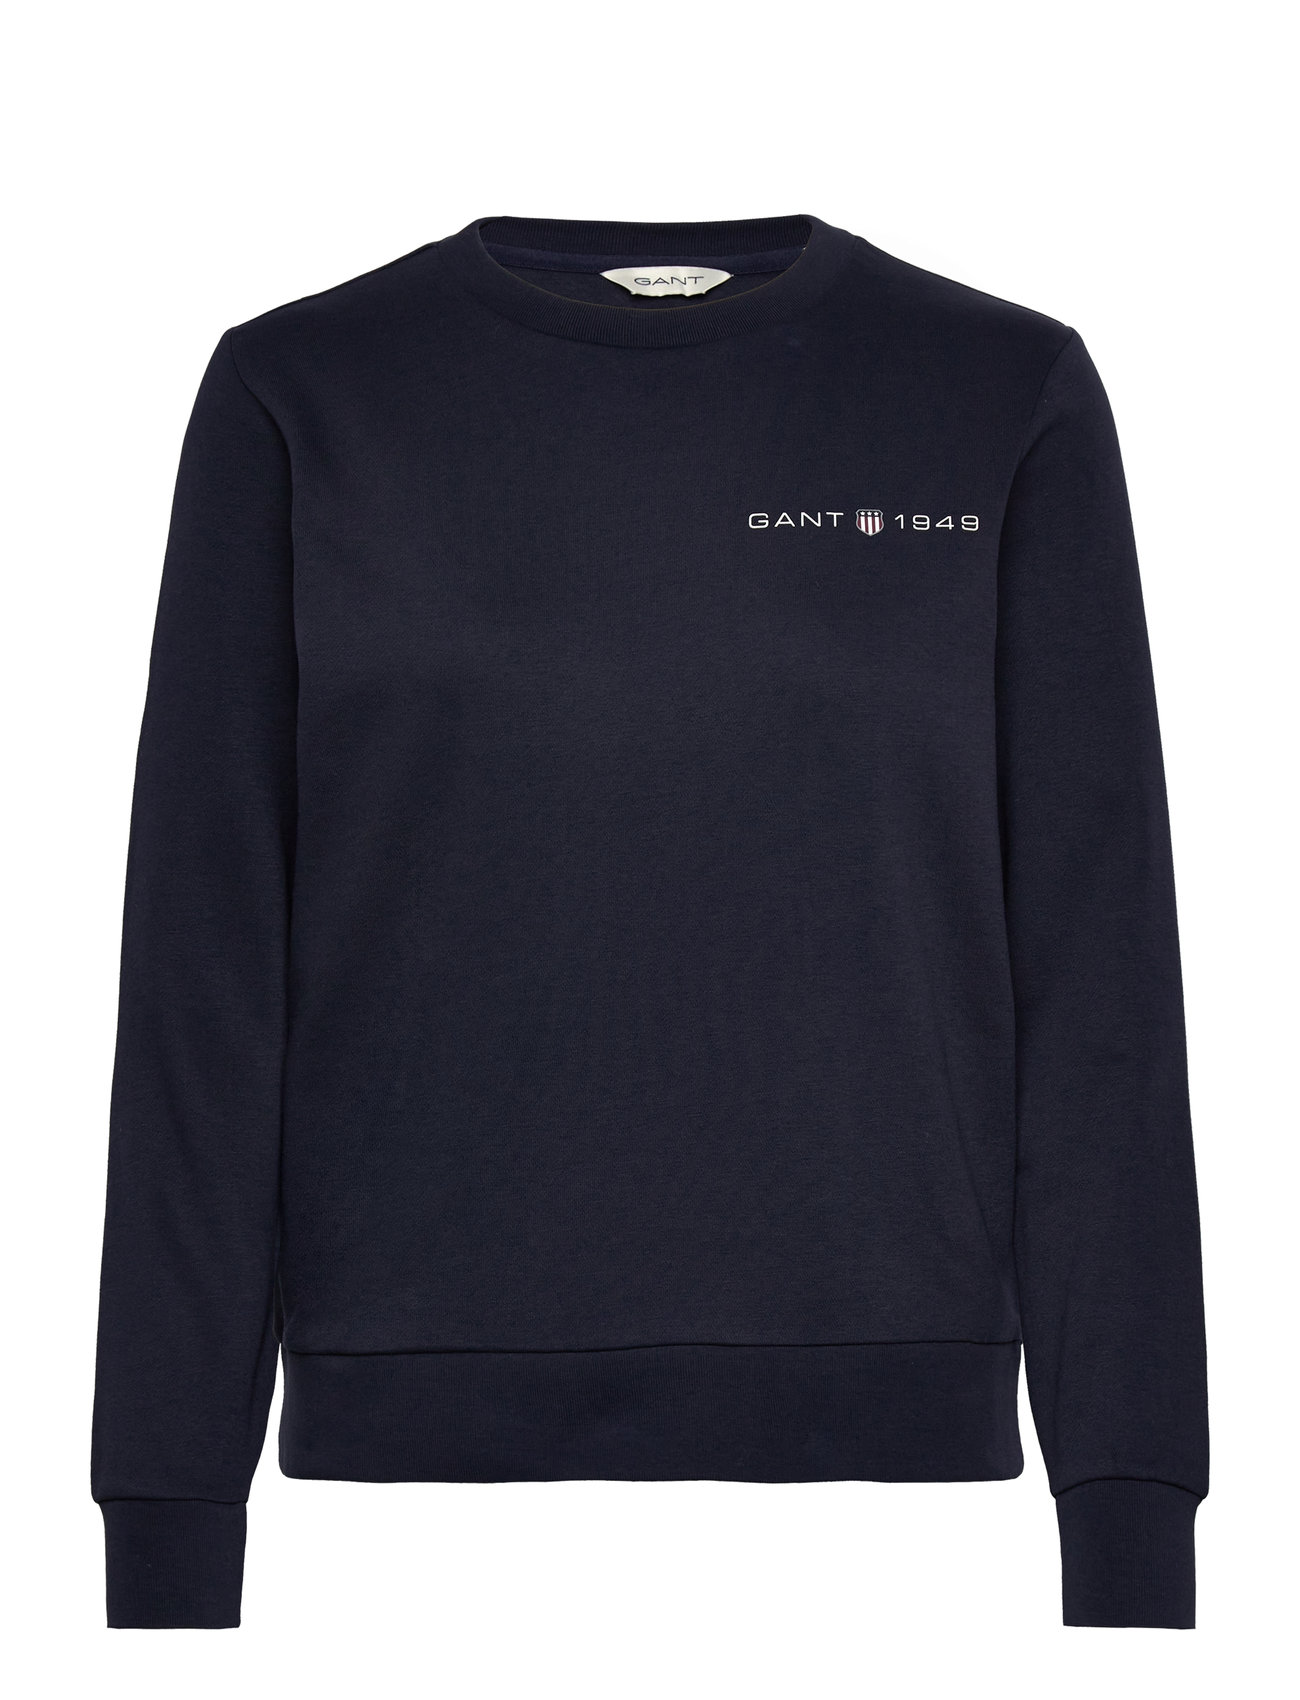 Reg Printed Graphic C-Neck Tops Sweatshirts & Hoodies Sweatshirts Blue GANT